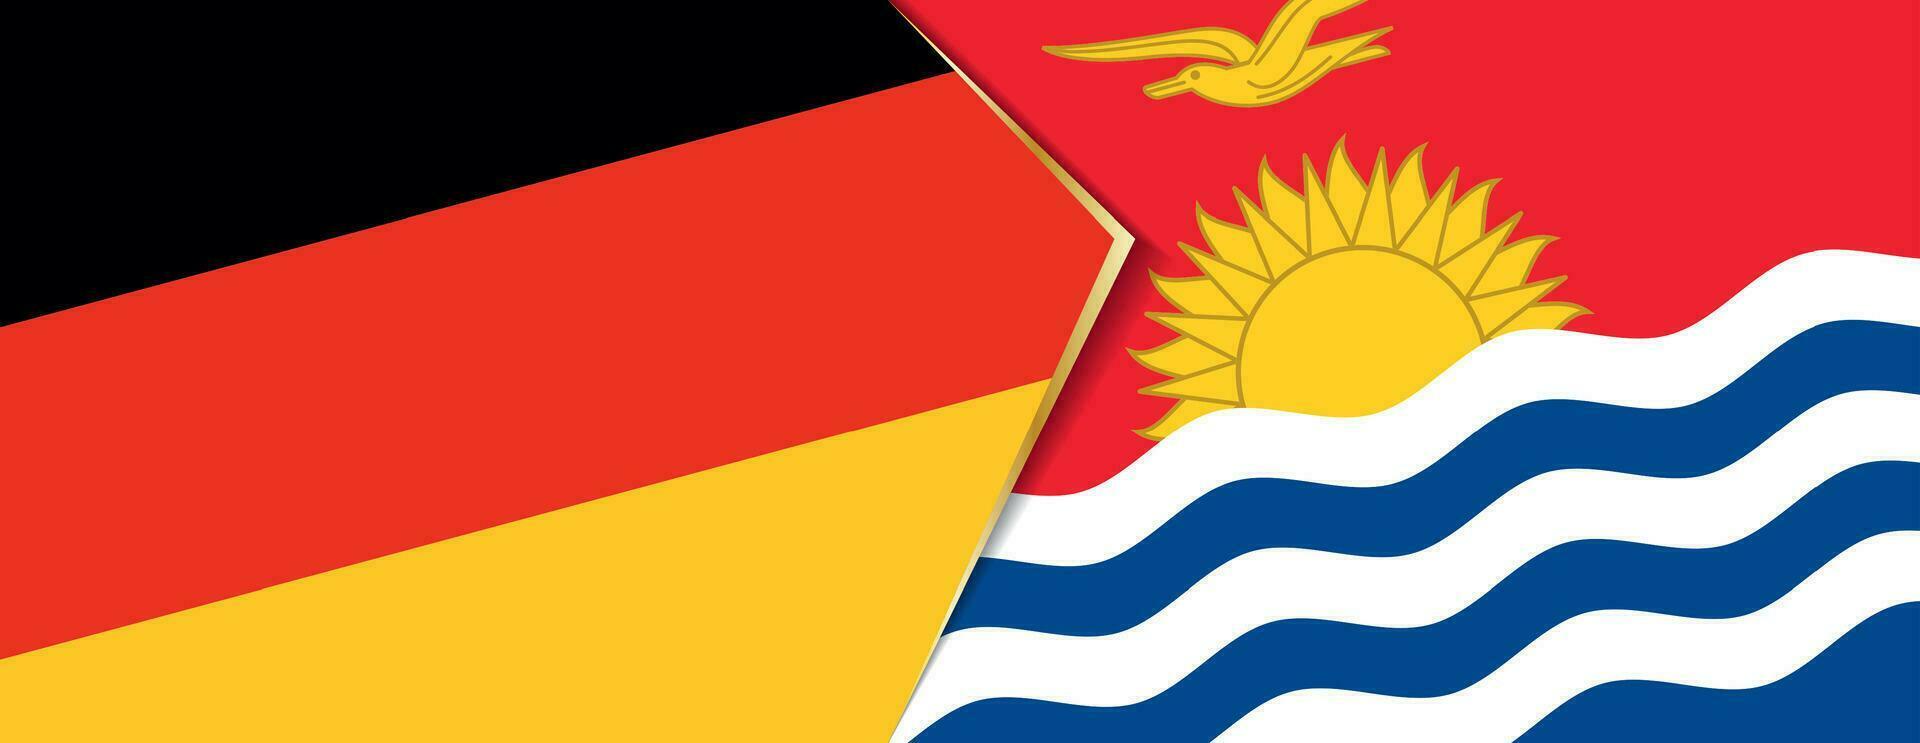 Germany and Kiribati flags, two vector flags.